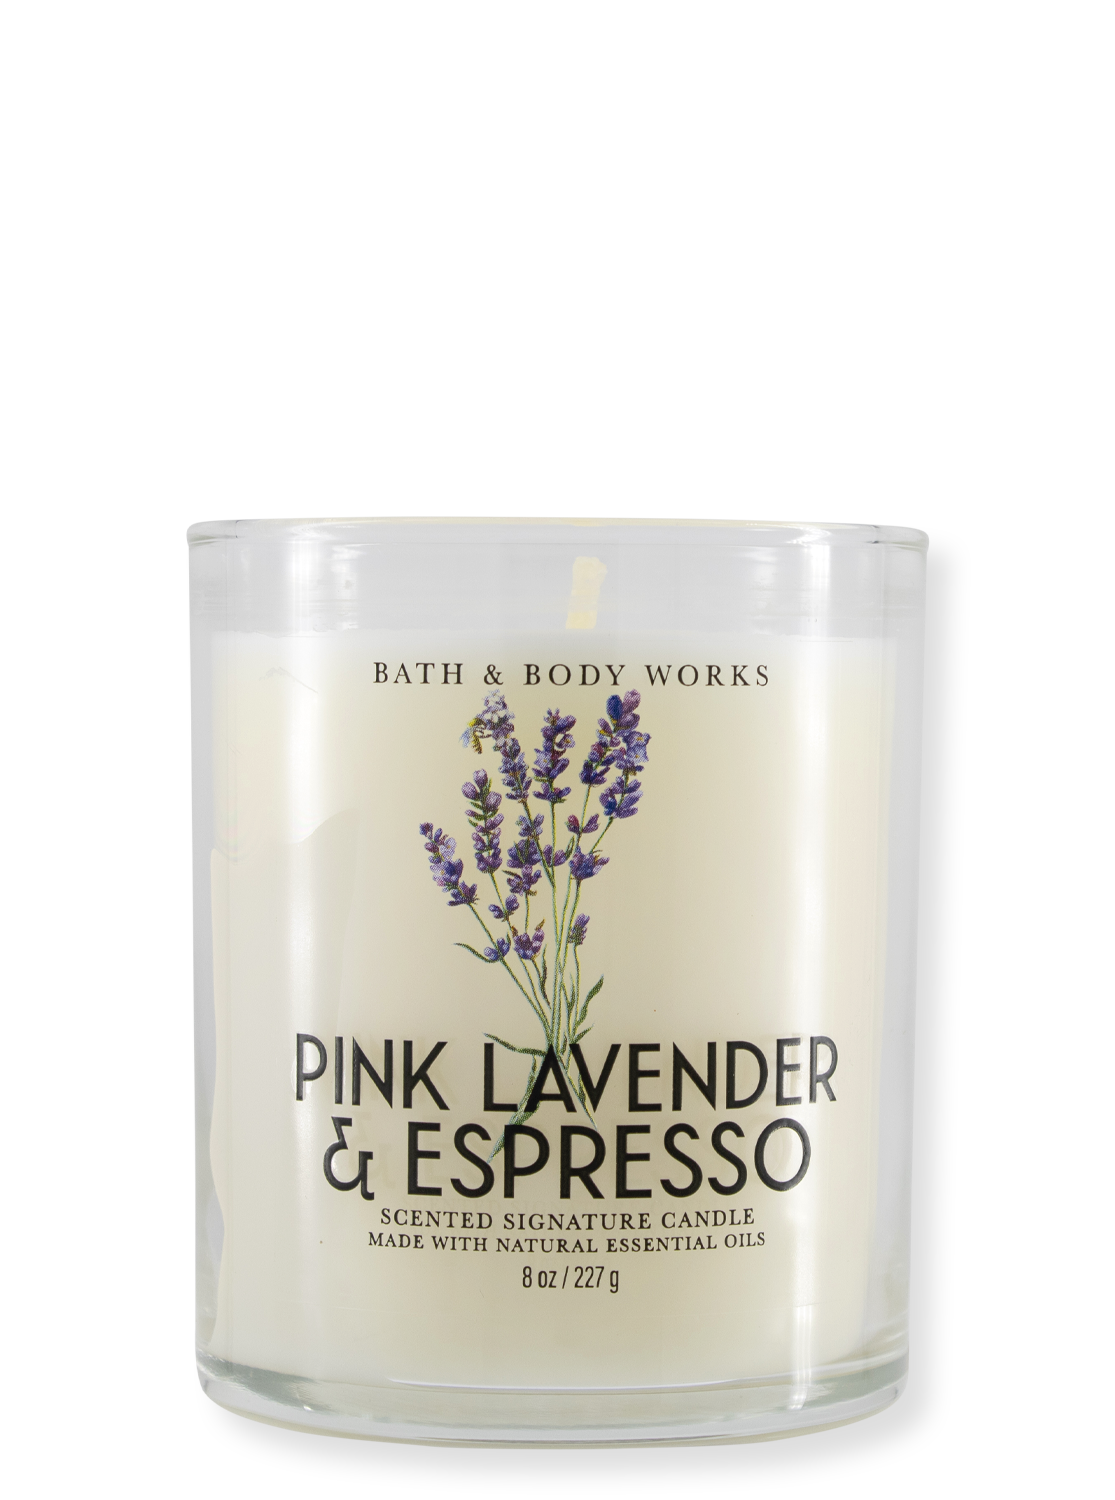 1-Docht Kerze - Pink Lavender & Espresso - 227g